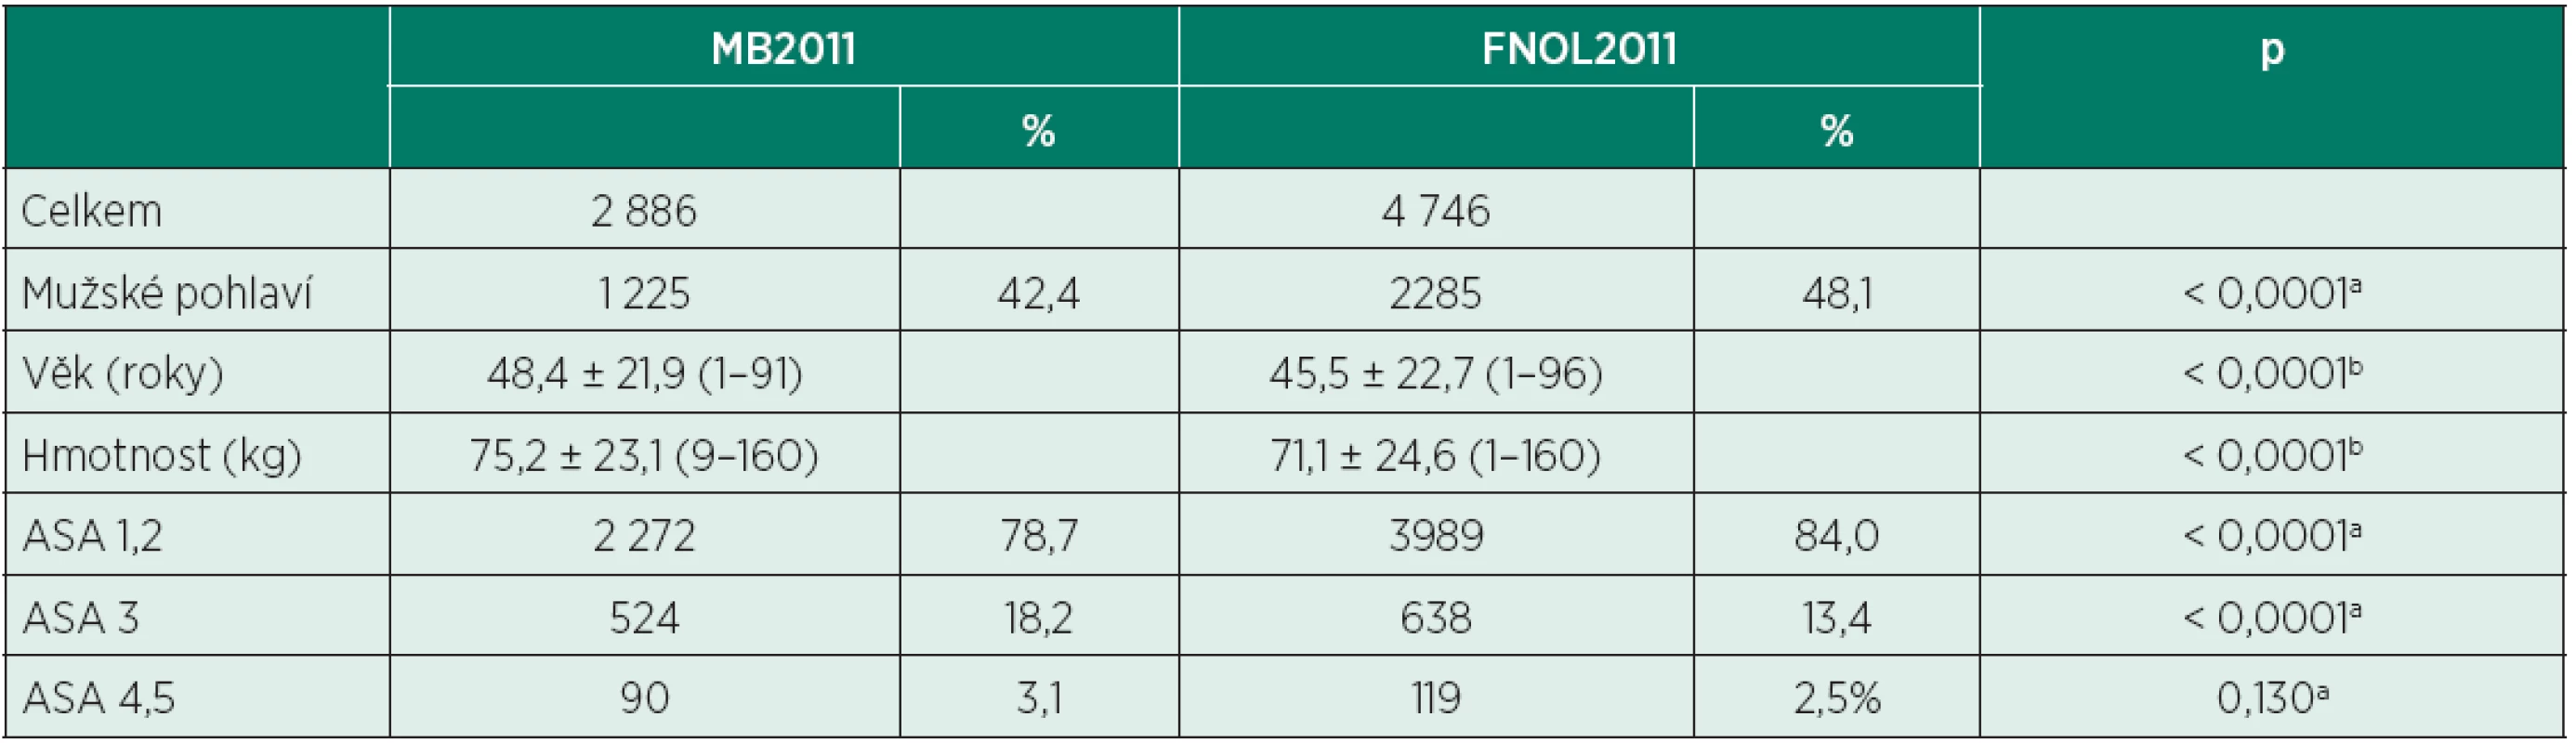 Demografické údaje (MB2011 vs. FNOL2011)